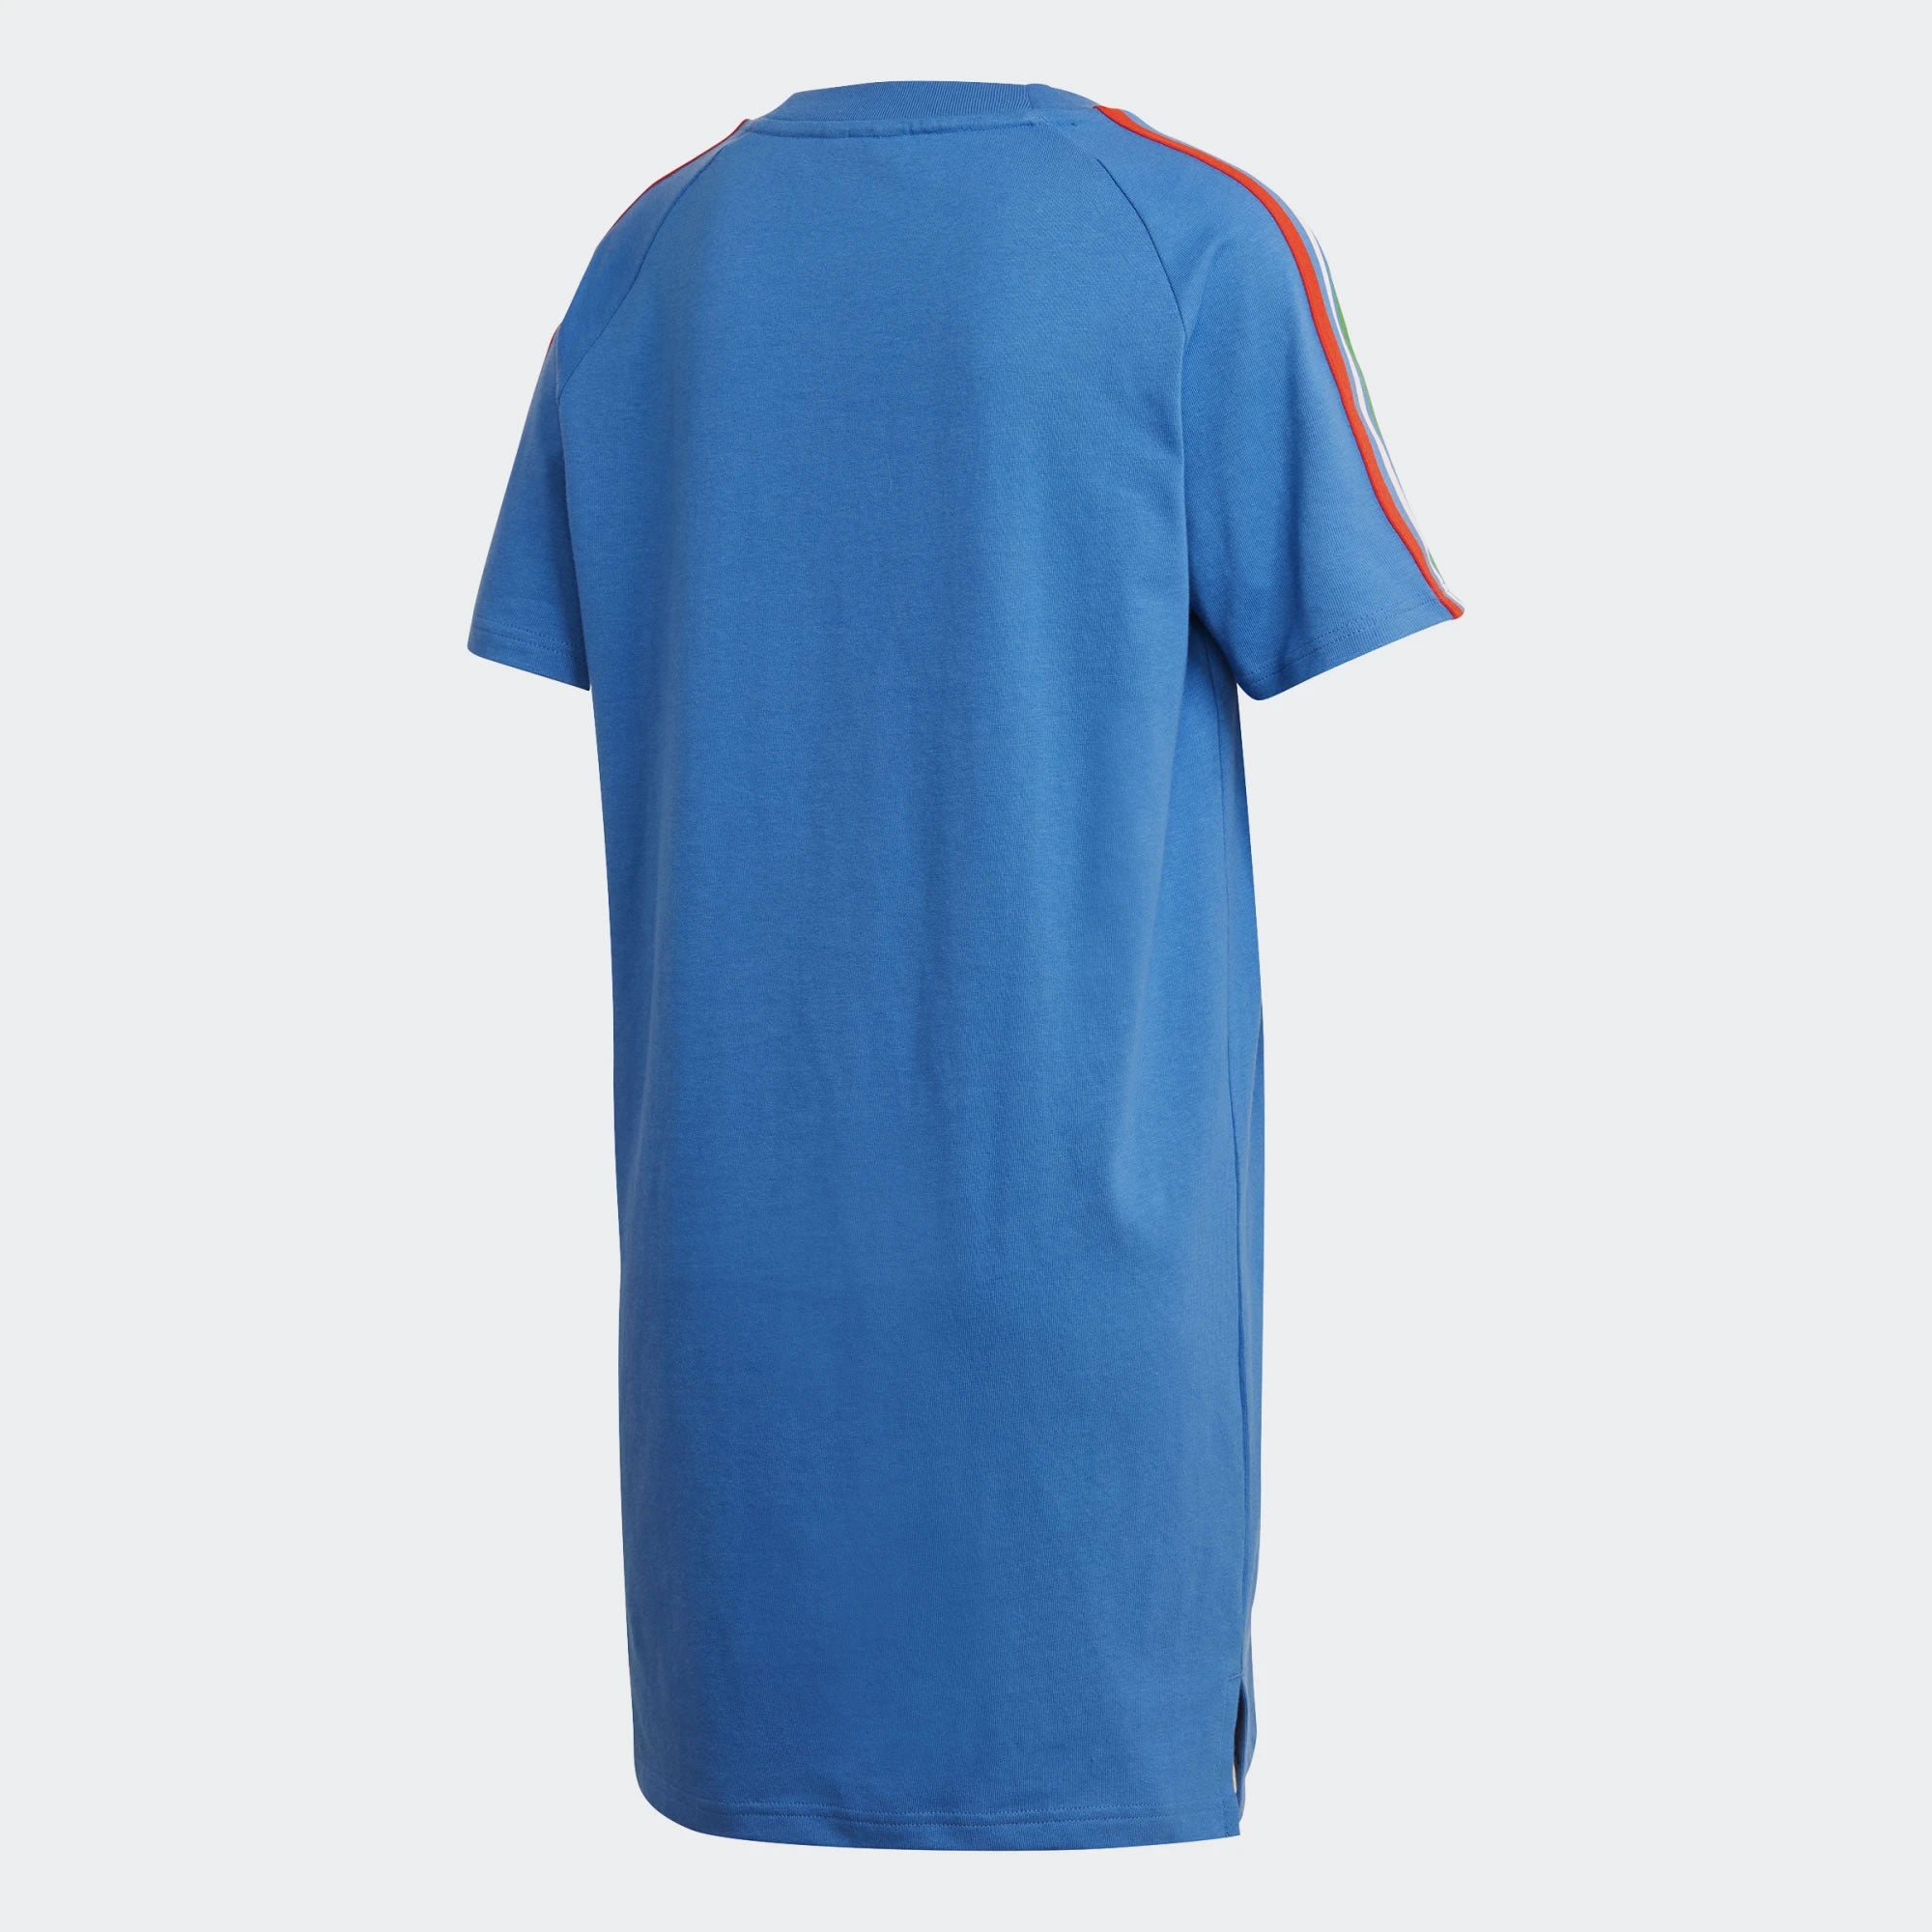 tradesports.co.uk Adidas Originals Women's Italy Tee Dress - Blue